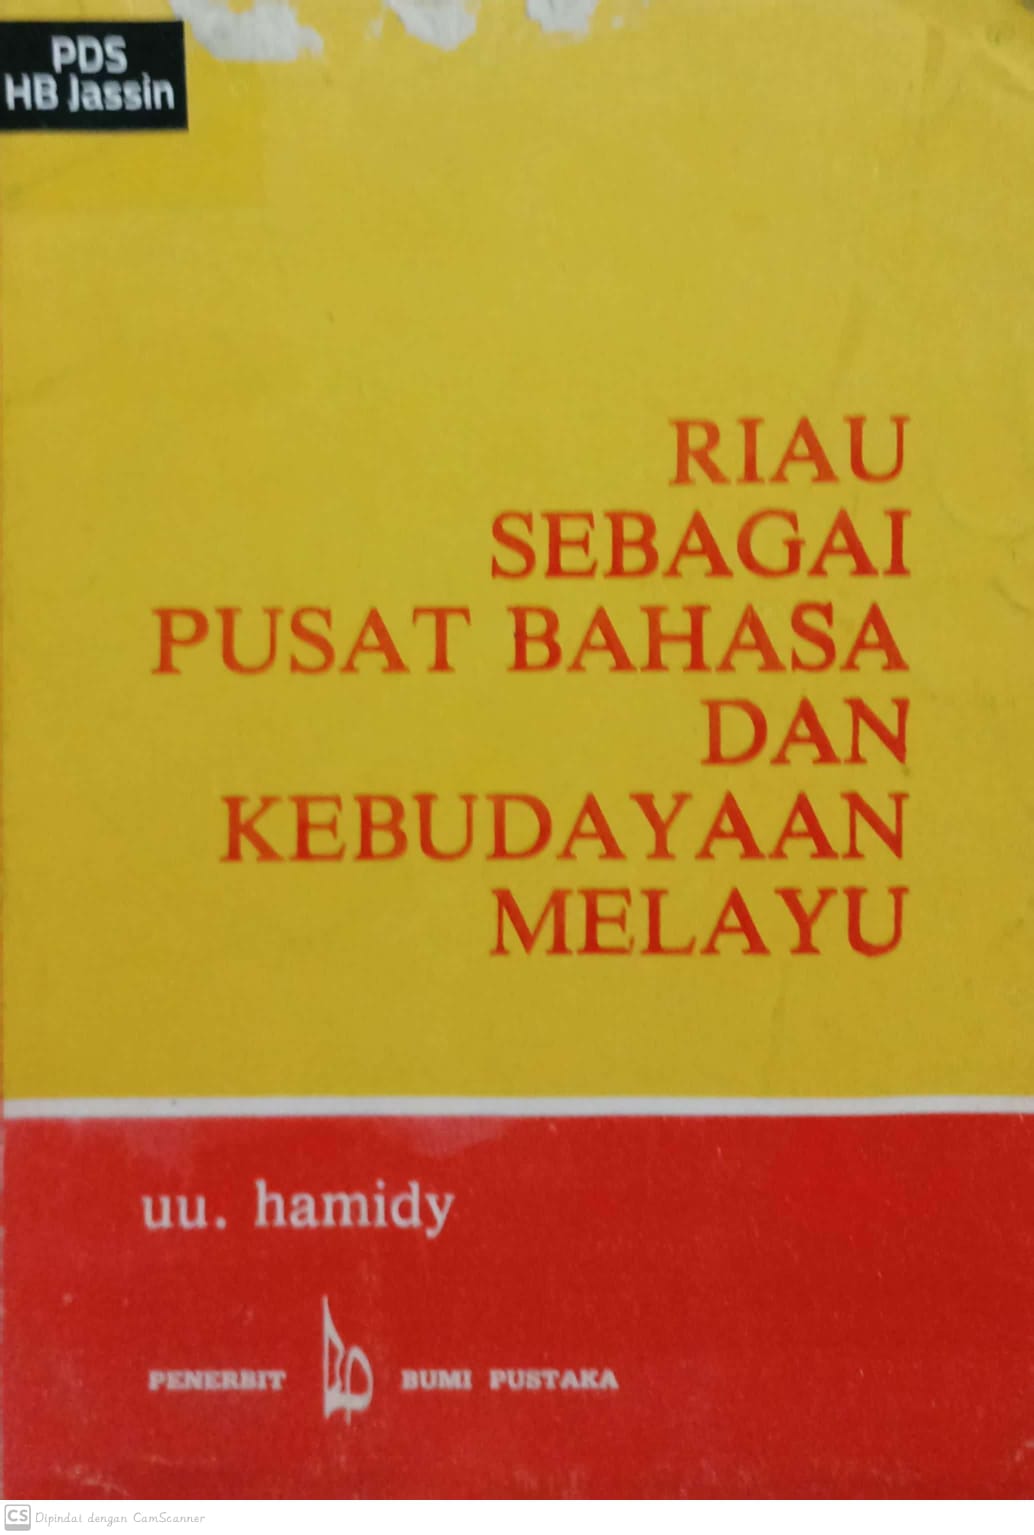 Riau sebagai pusat bahasa dan kebudayaan melayu